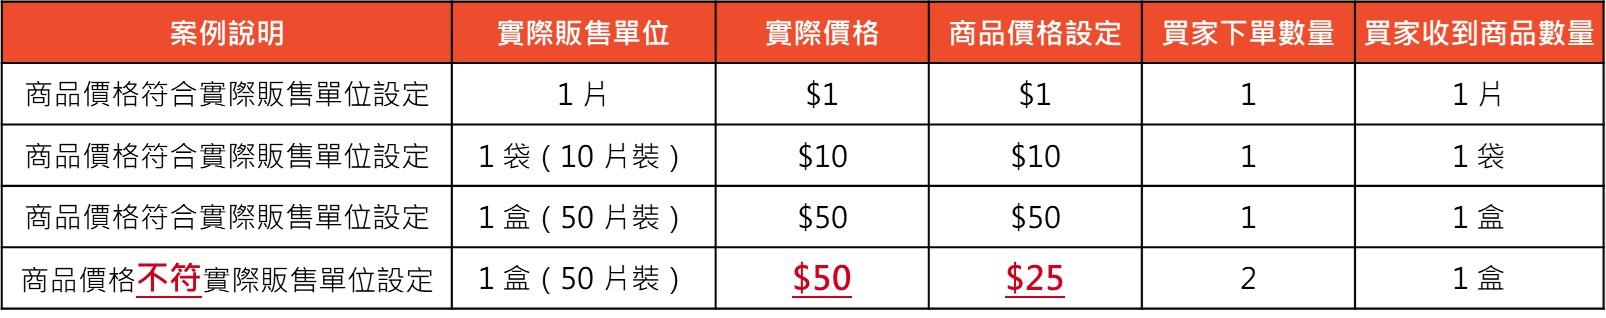 Shopee中国台湾站禁止引导买家下单指定数量商品